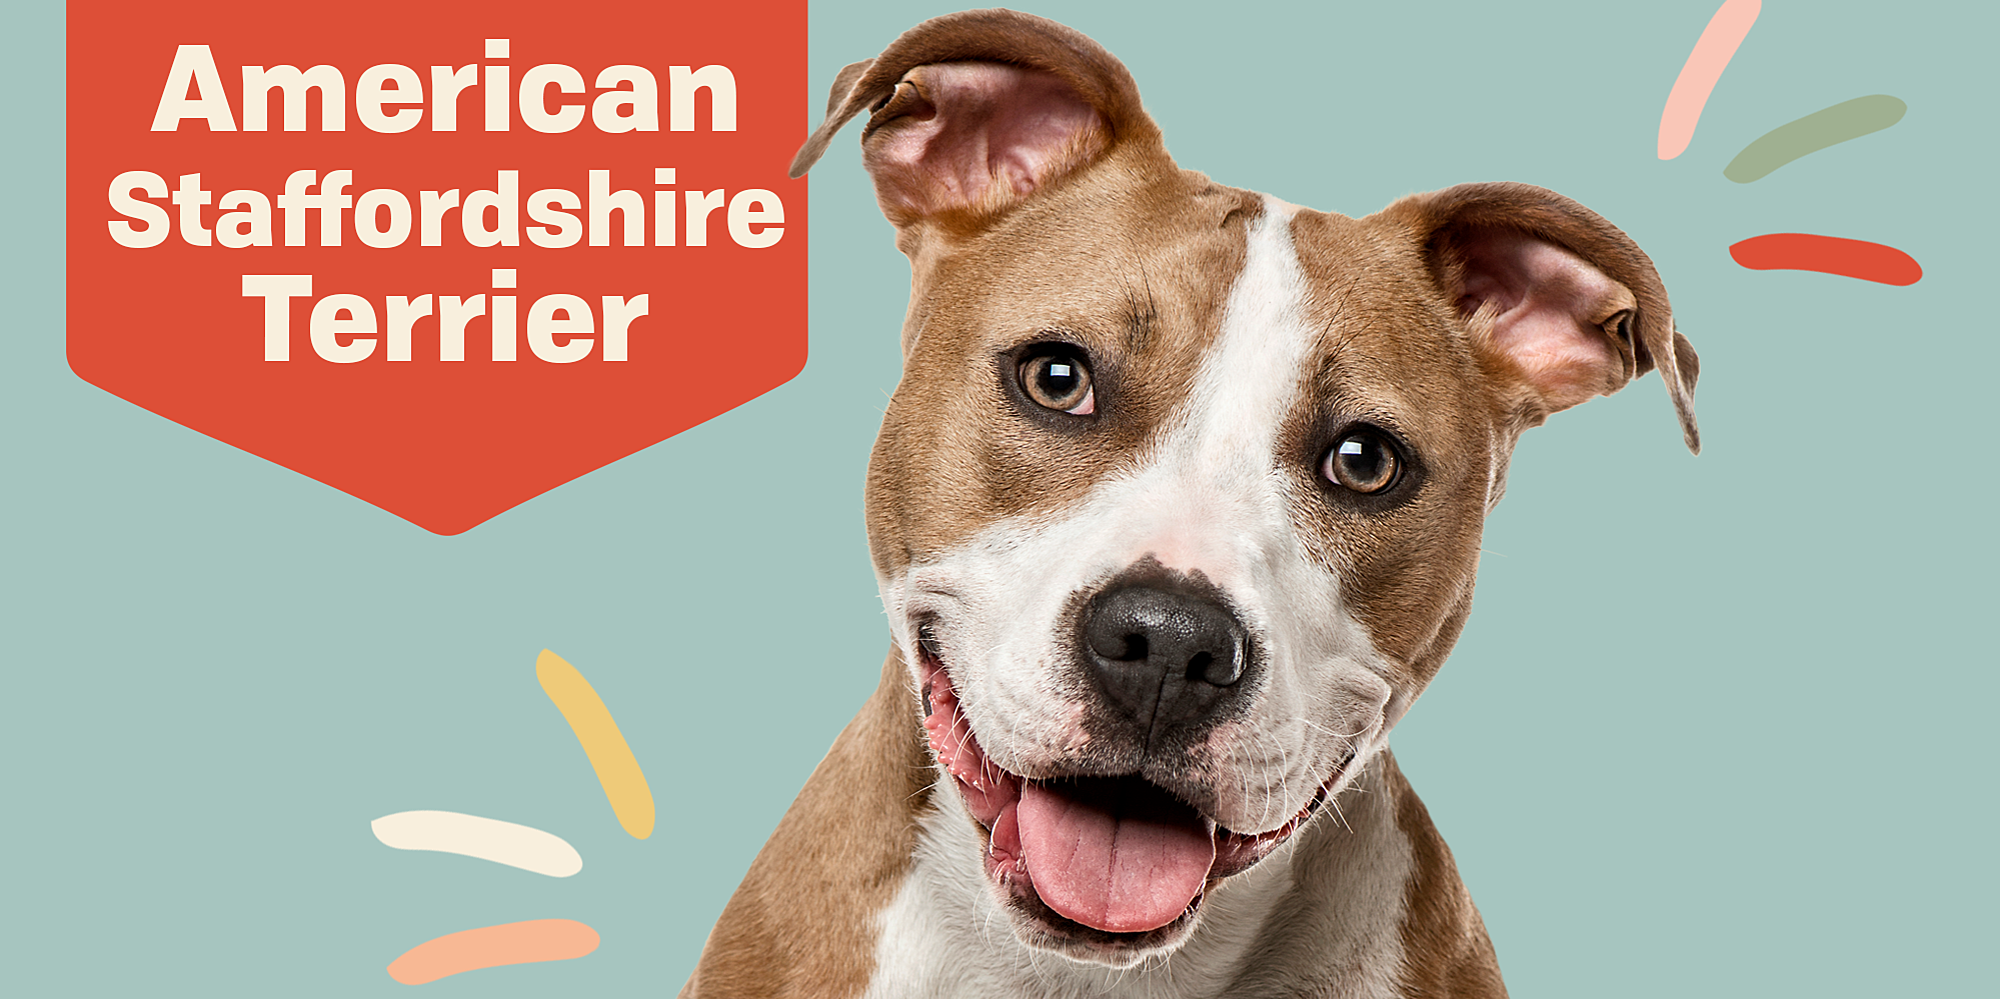 American Staffordshire Terrier (AmStaff)